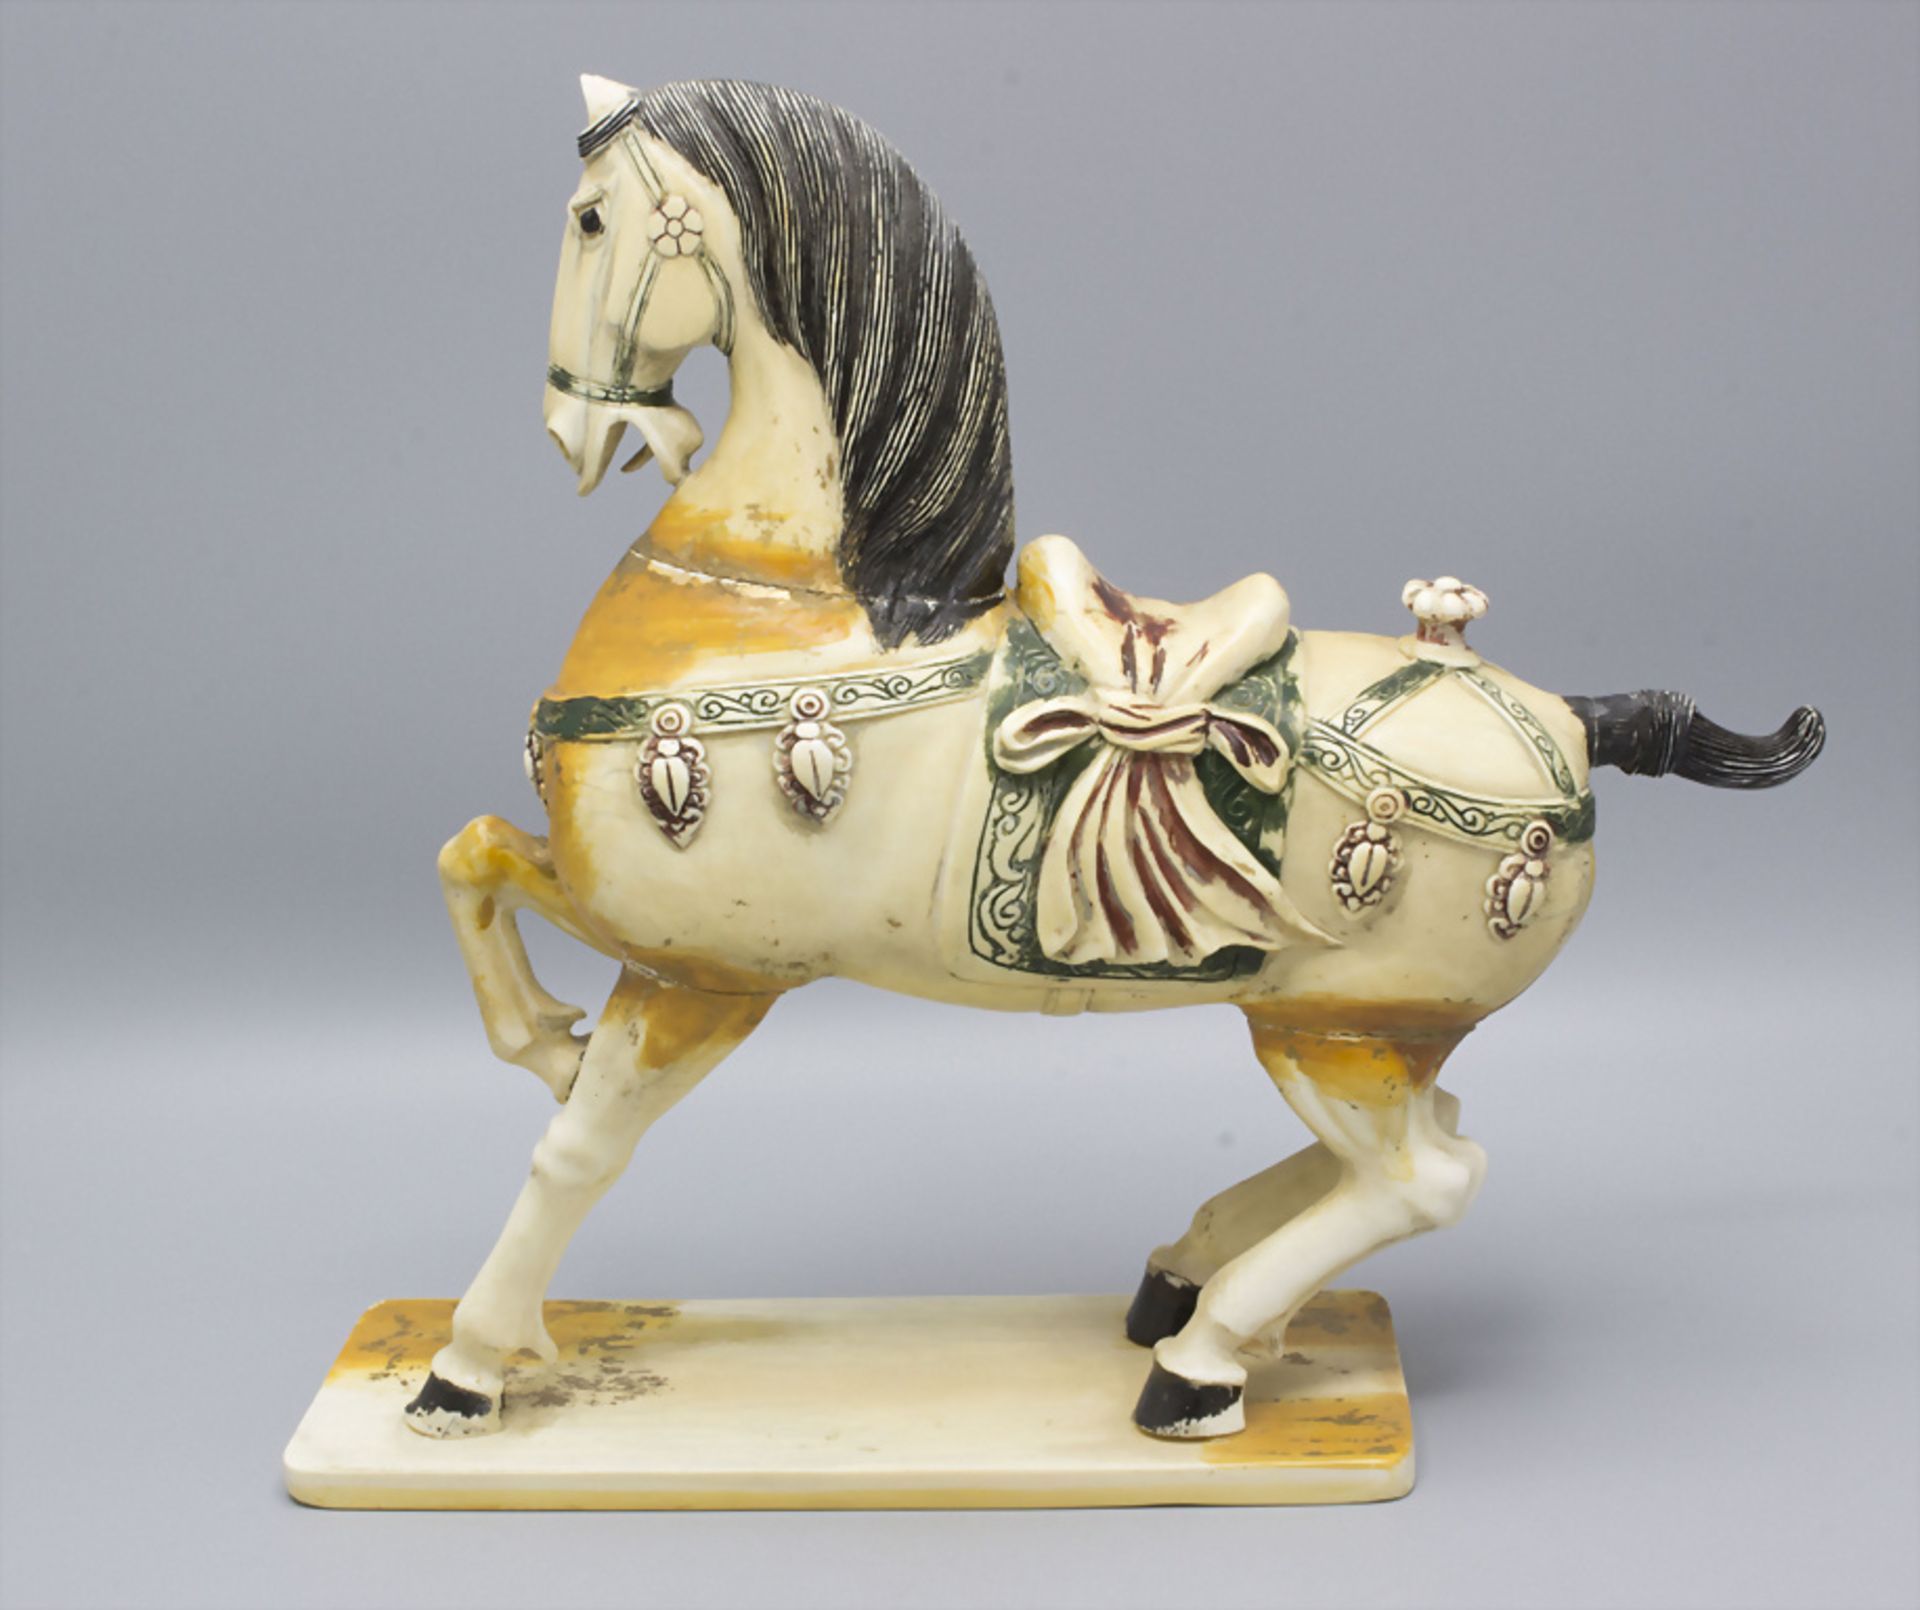 Tierfigur 'Pferd' / An animal figure of a horse, China, 18. / 19. Jh.